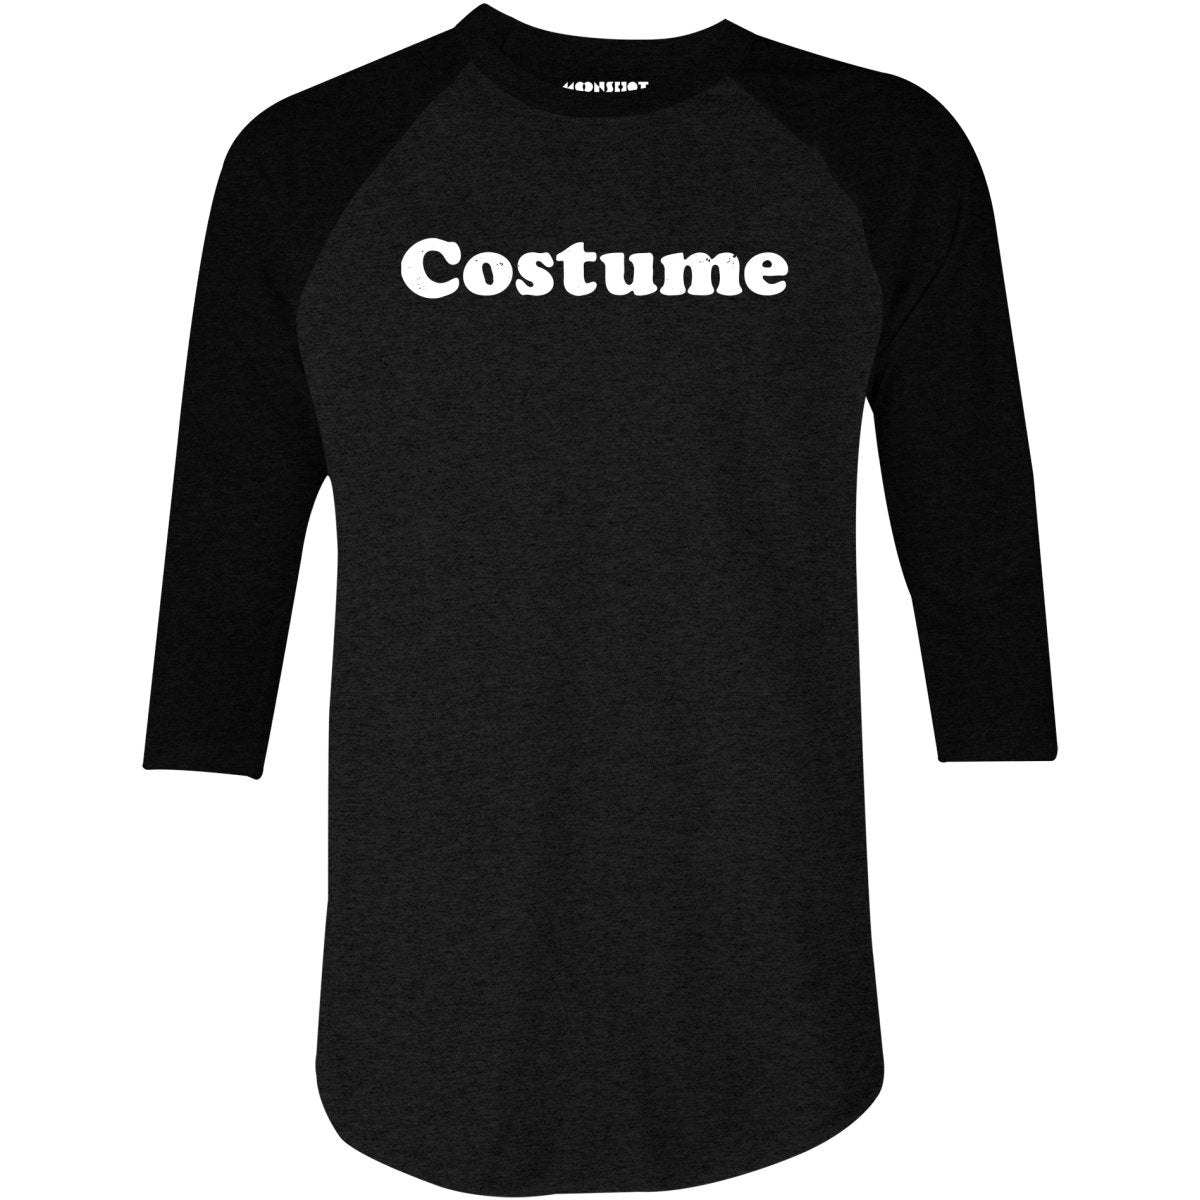 Costume - 3/4 Sleeve Raglan T-Shirt